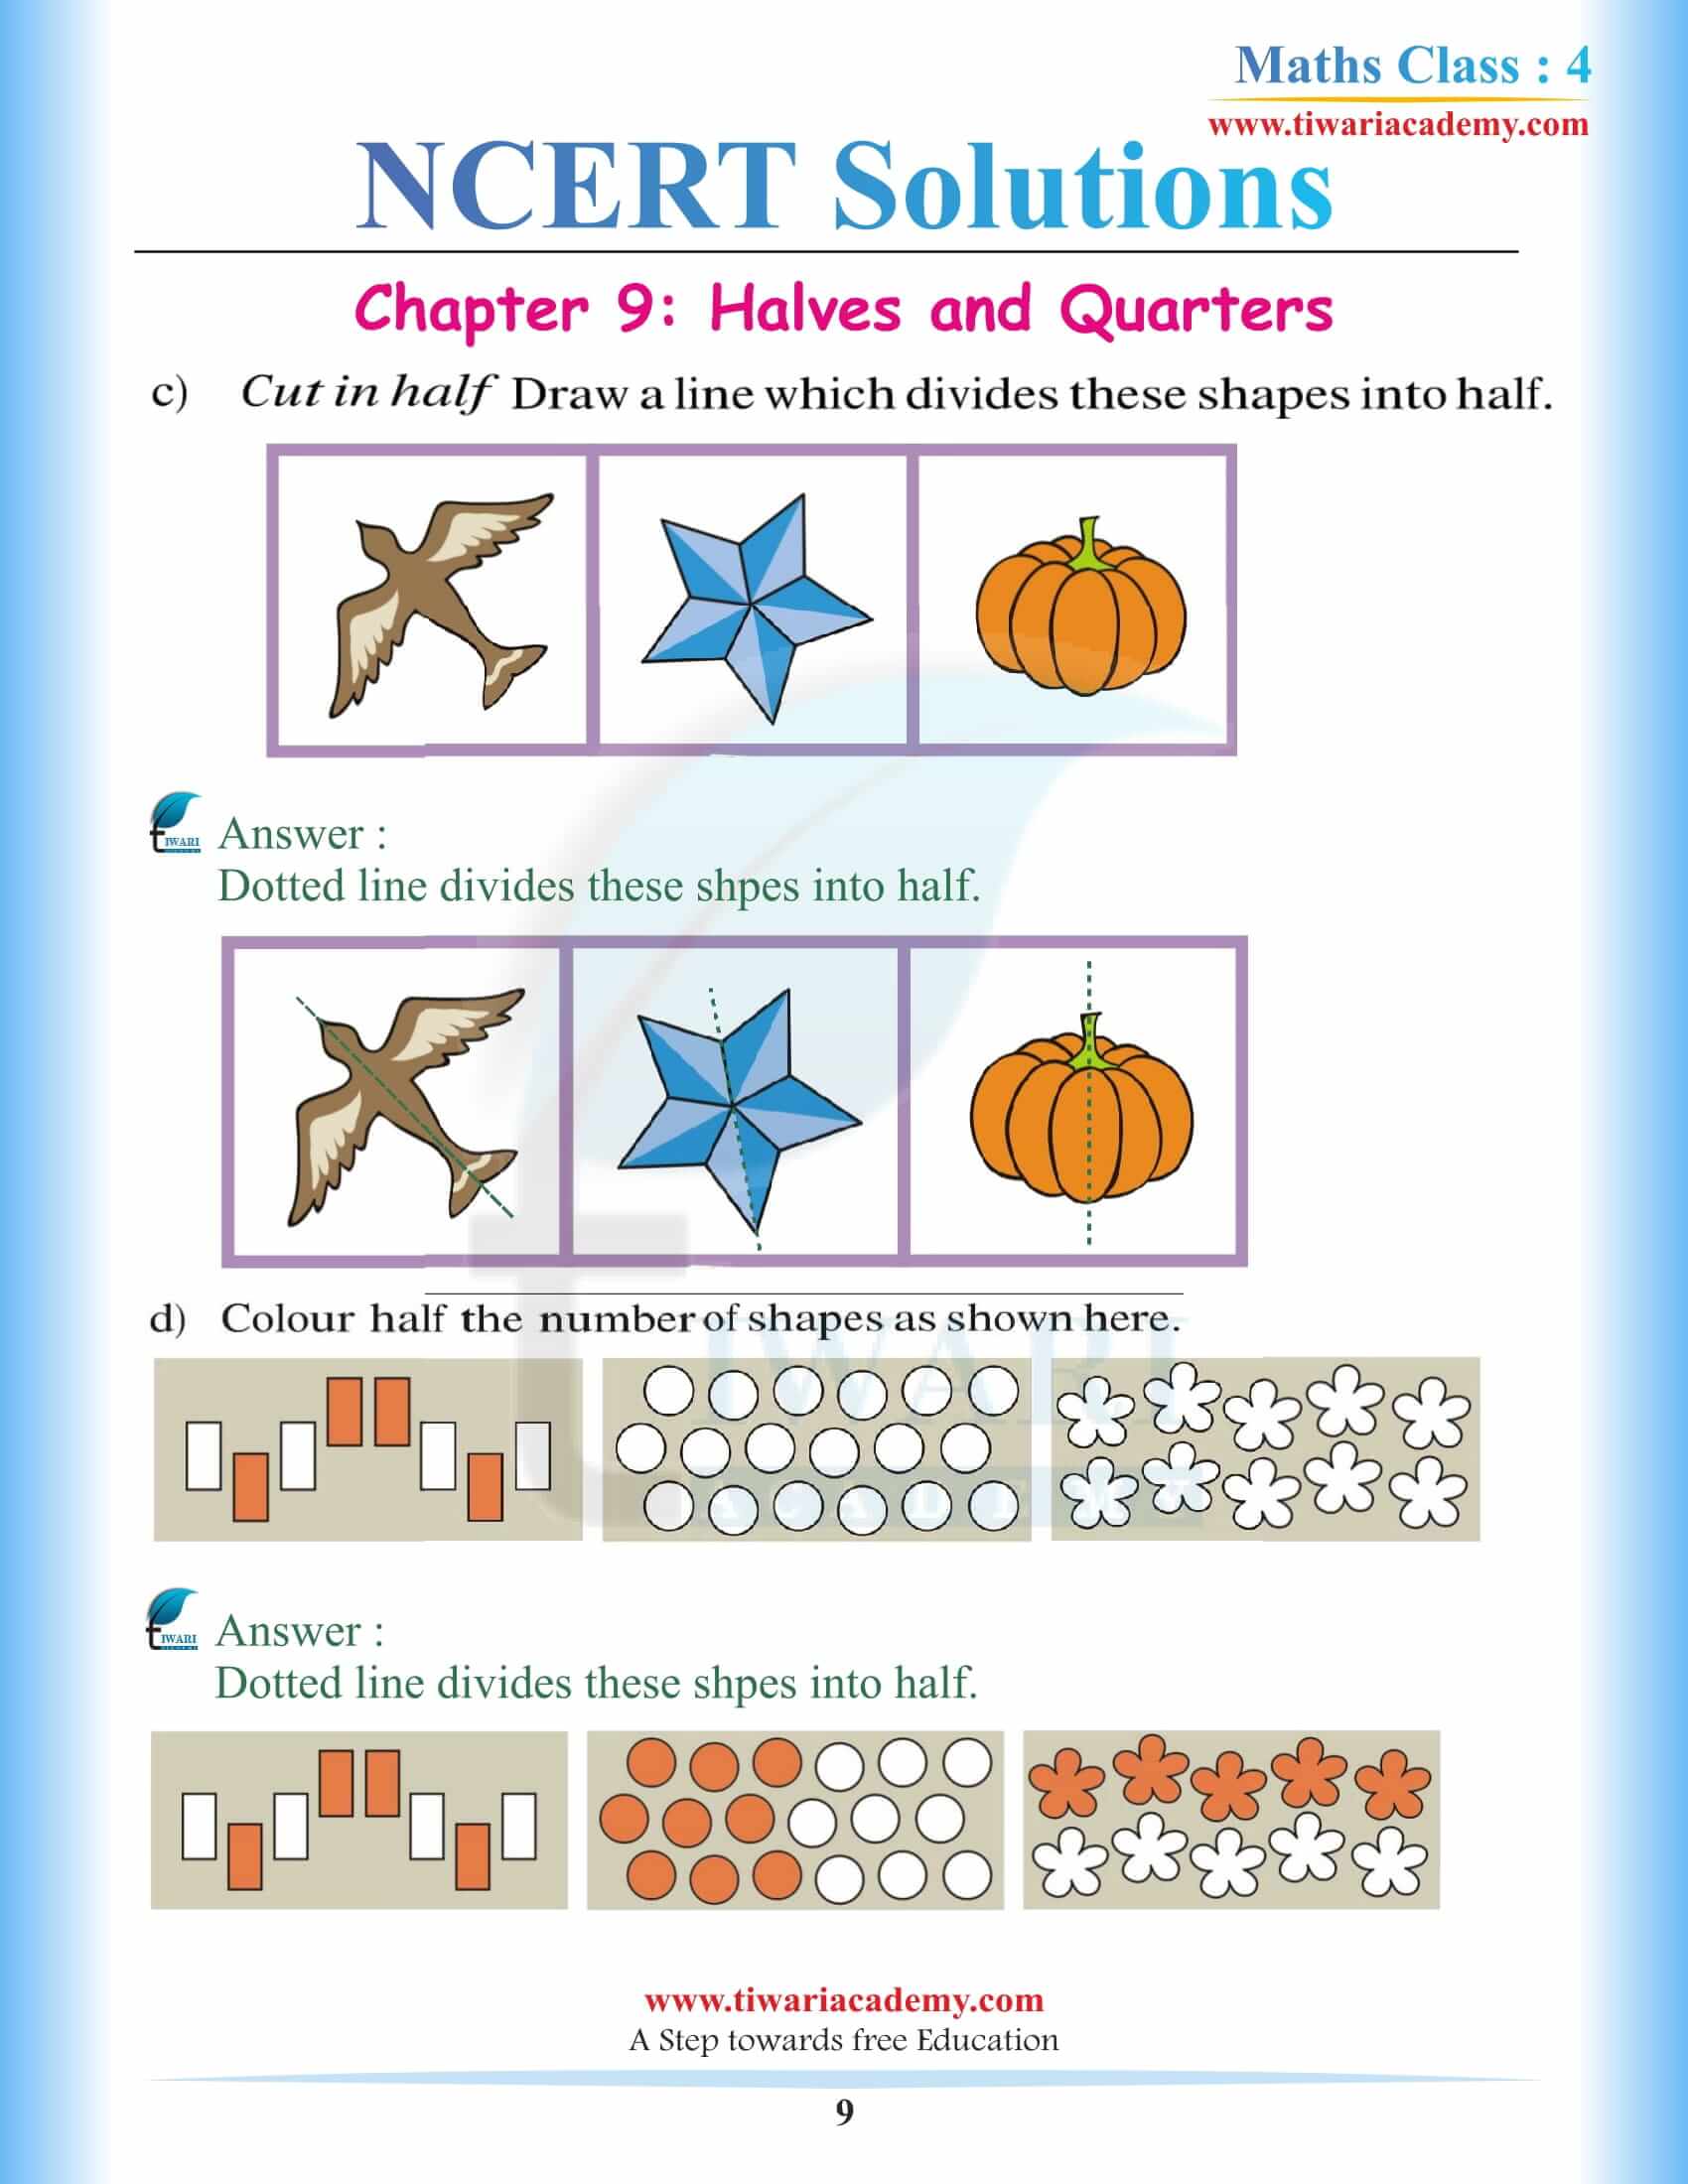 Class 4 Maths NCERT Chapter 9 Solutions in English Medium